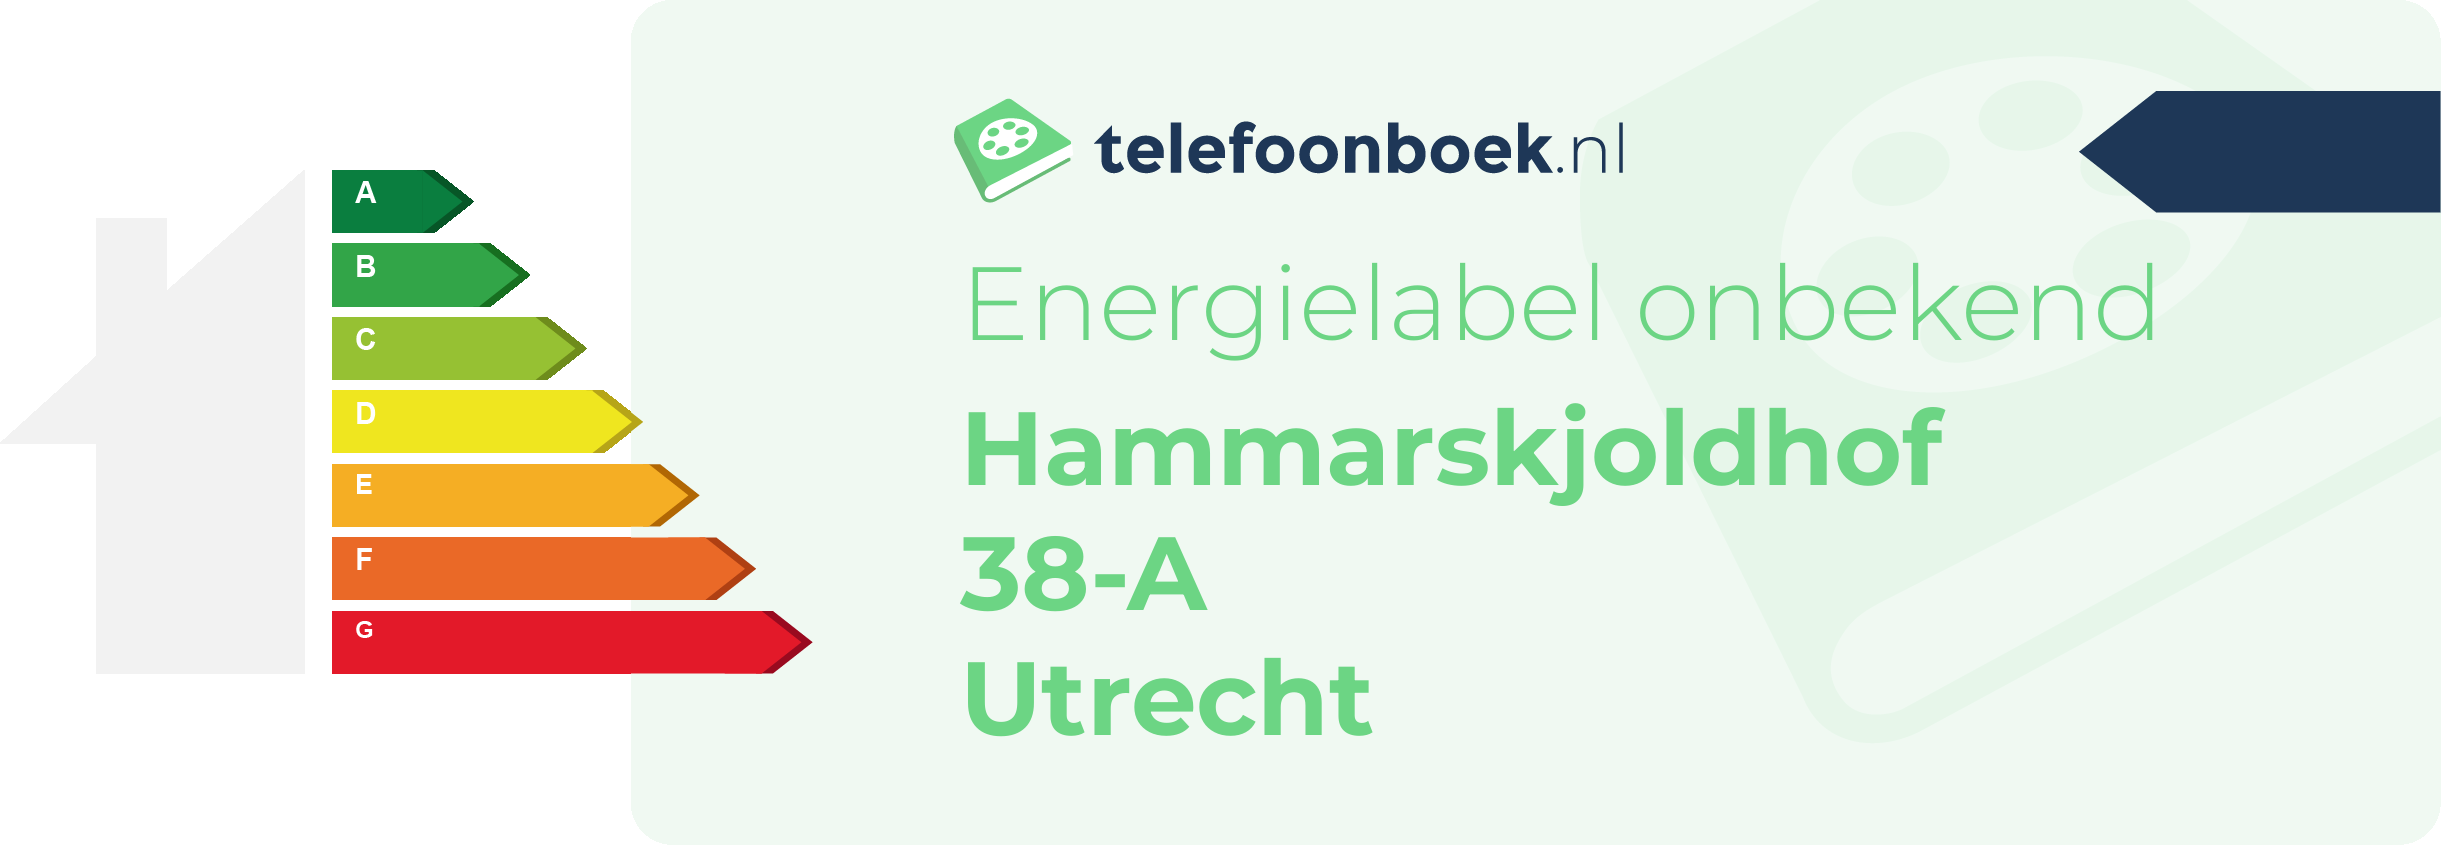 Energielabel Hammarskjoldhof 38-A Utrecht